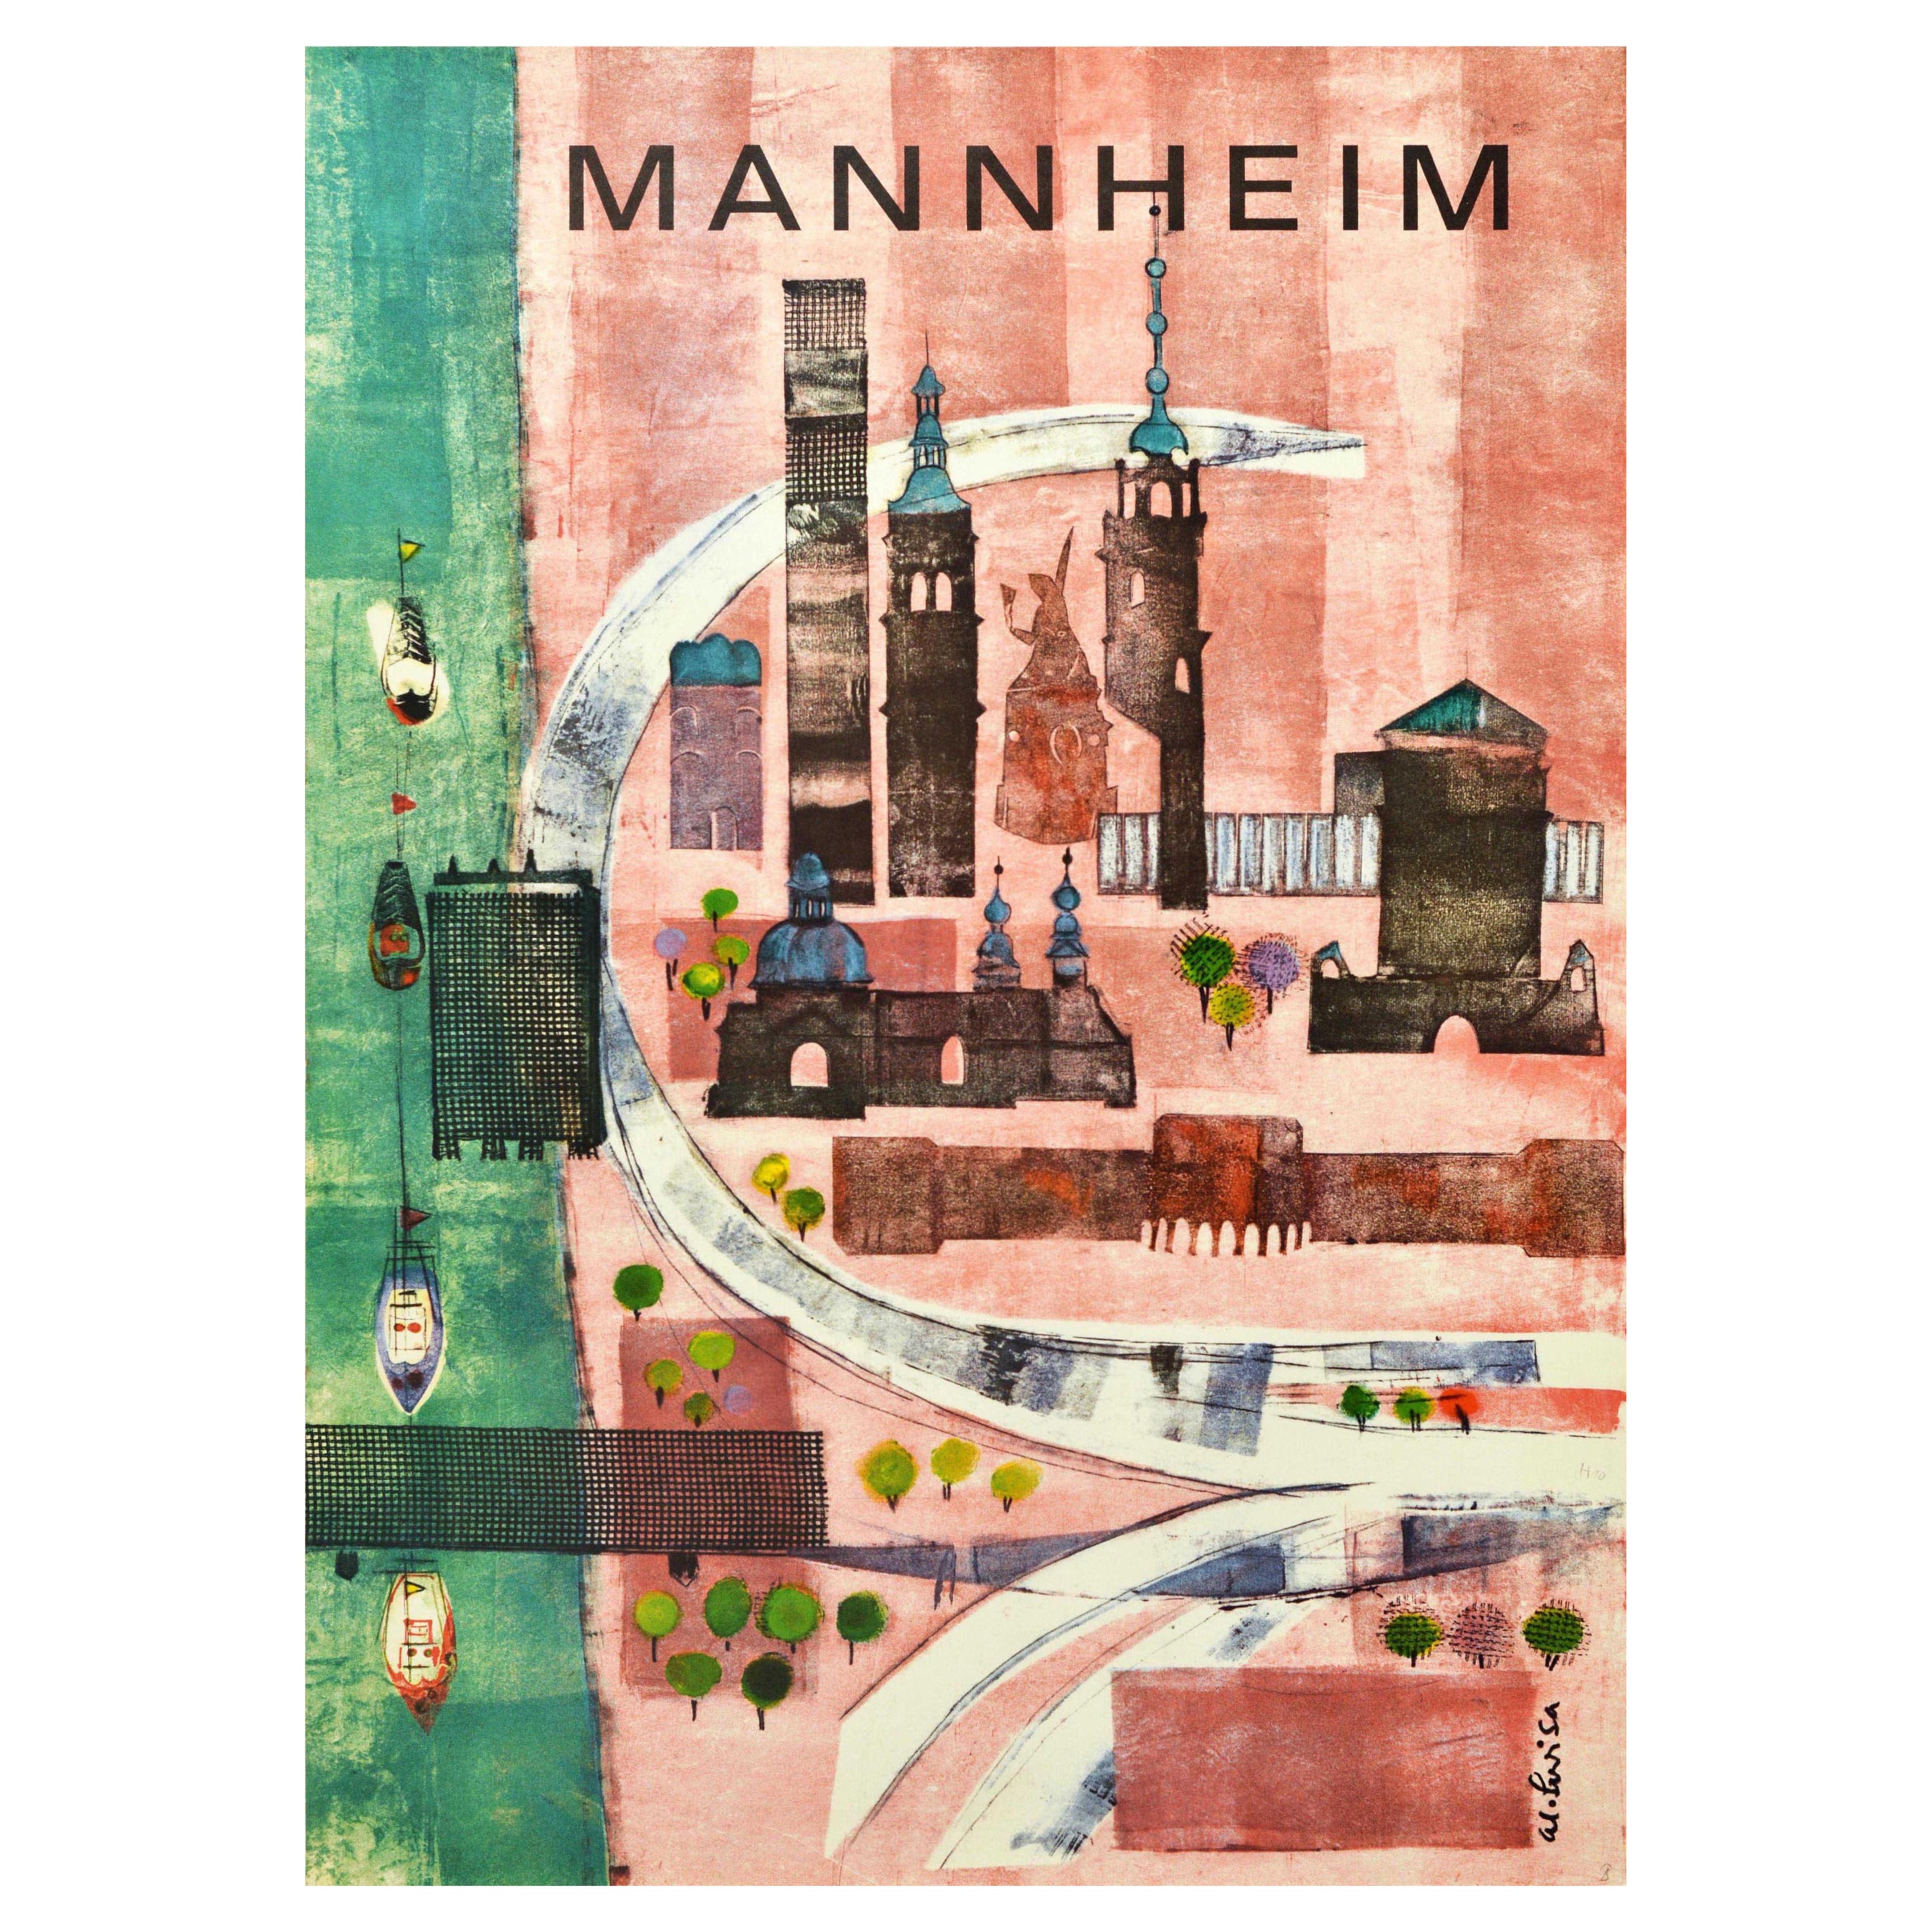 Original Vintage Travel Poster Mannheim University City Architecture River View